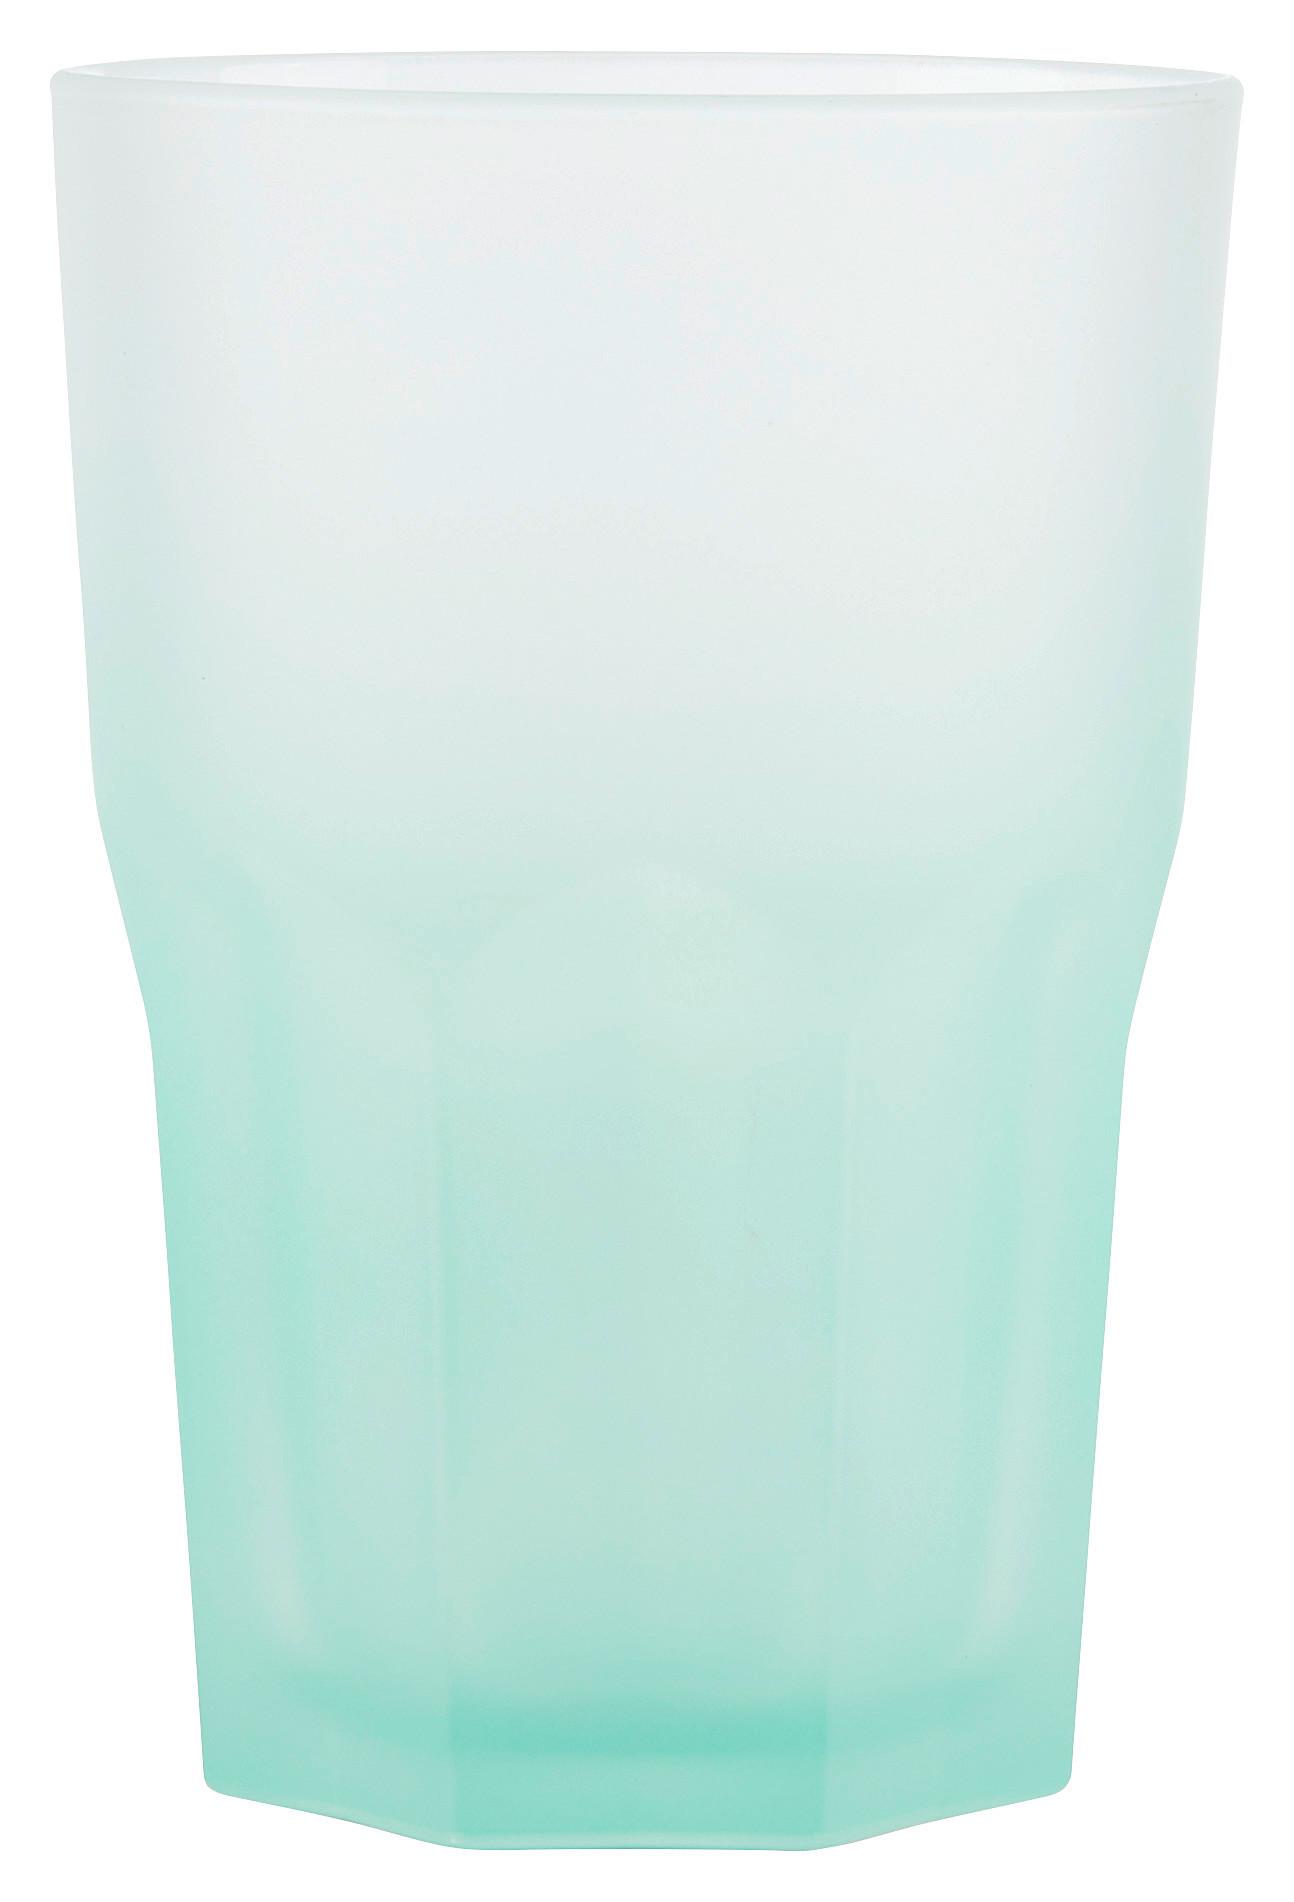 szklanka Sandy mix kolorów - jaskrawy róż/jasnozielony, Modern, szkło (0,40l) - Modern Living